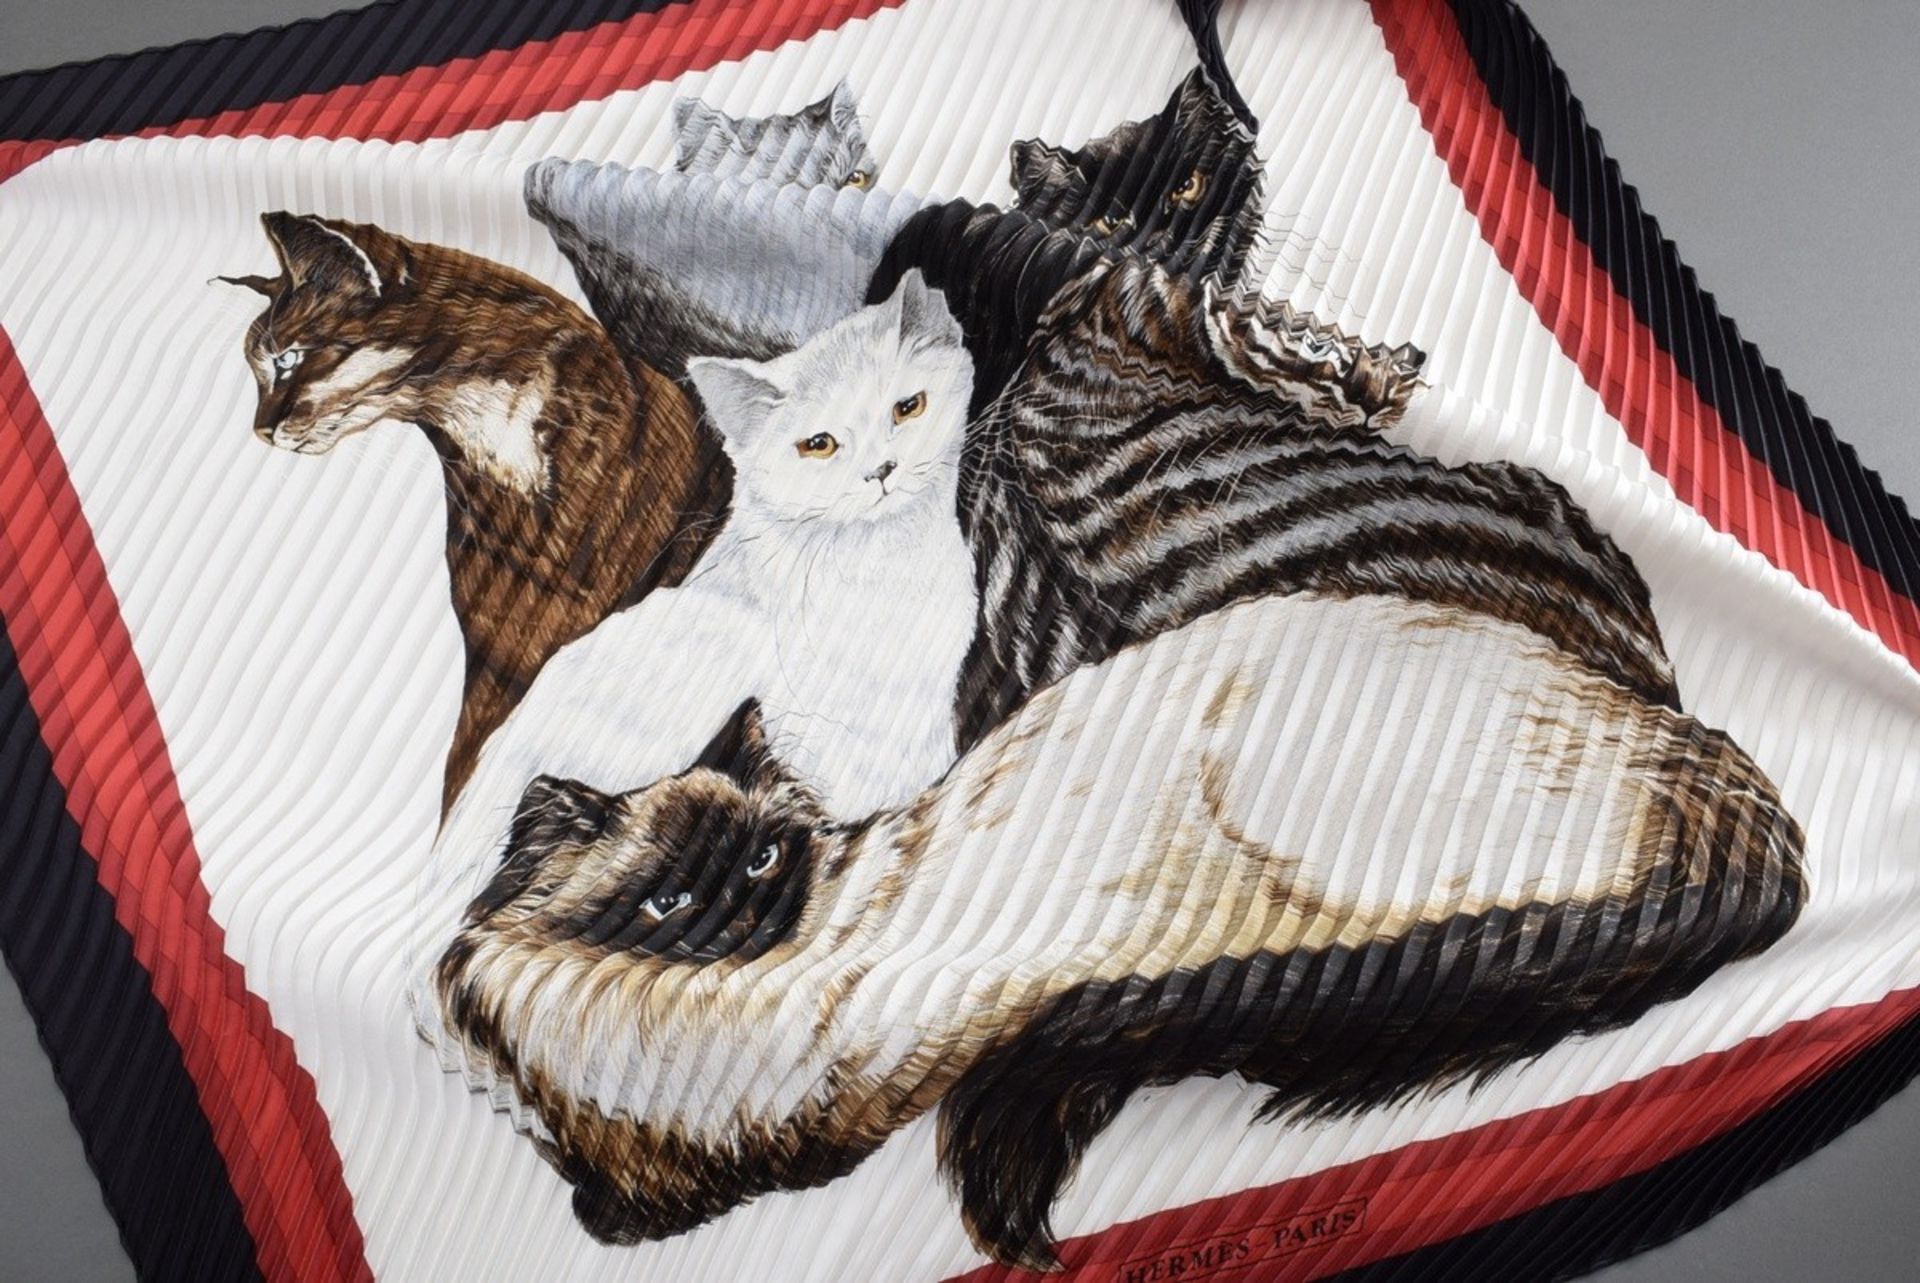 Hermès Silk Plissé Shawl "Cats" with Drape Ring, 130x135cm, in original box - Image 2 of 6